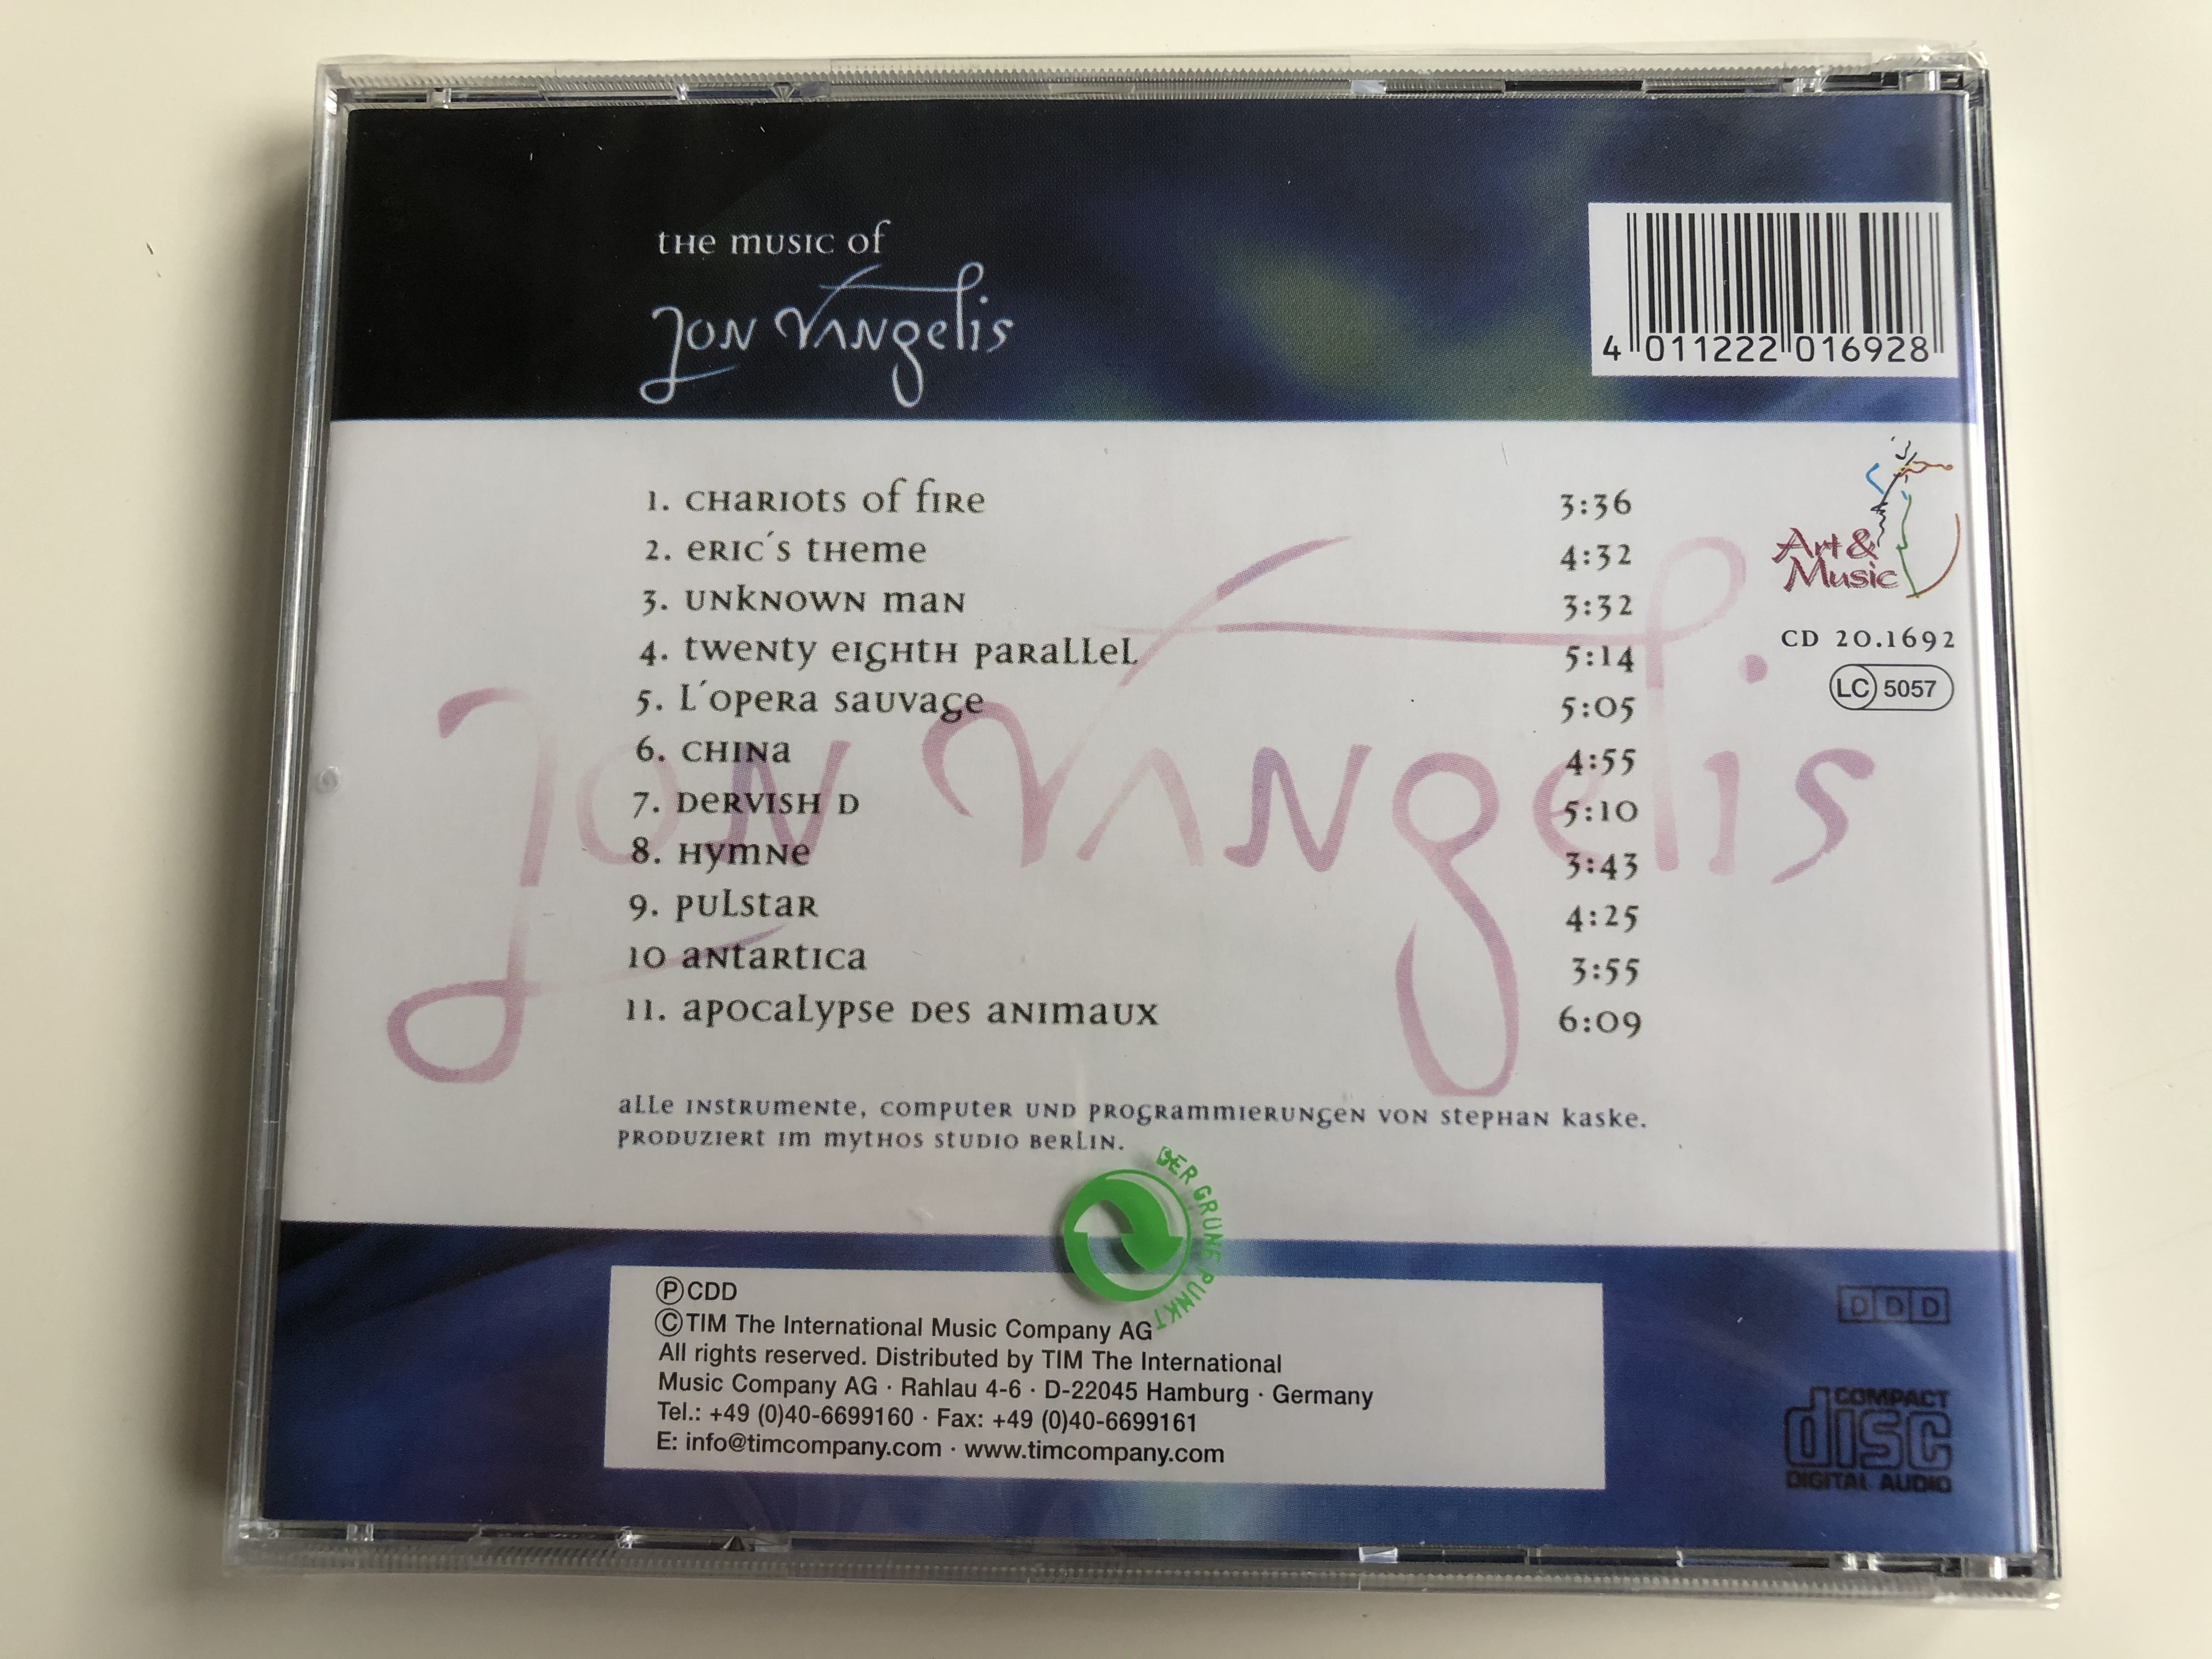 the-music-of-jon-vangelis-performed-by-m.a.s.s.-art-music-audio-cd-cd-20-2-.jpg